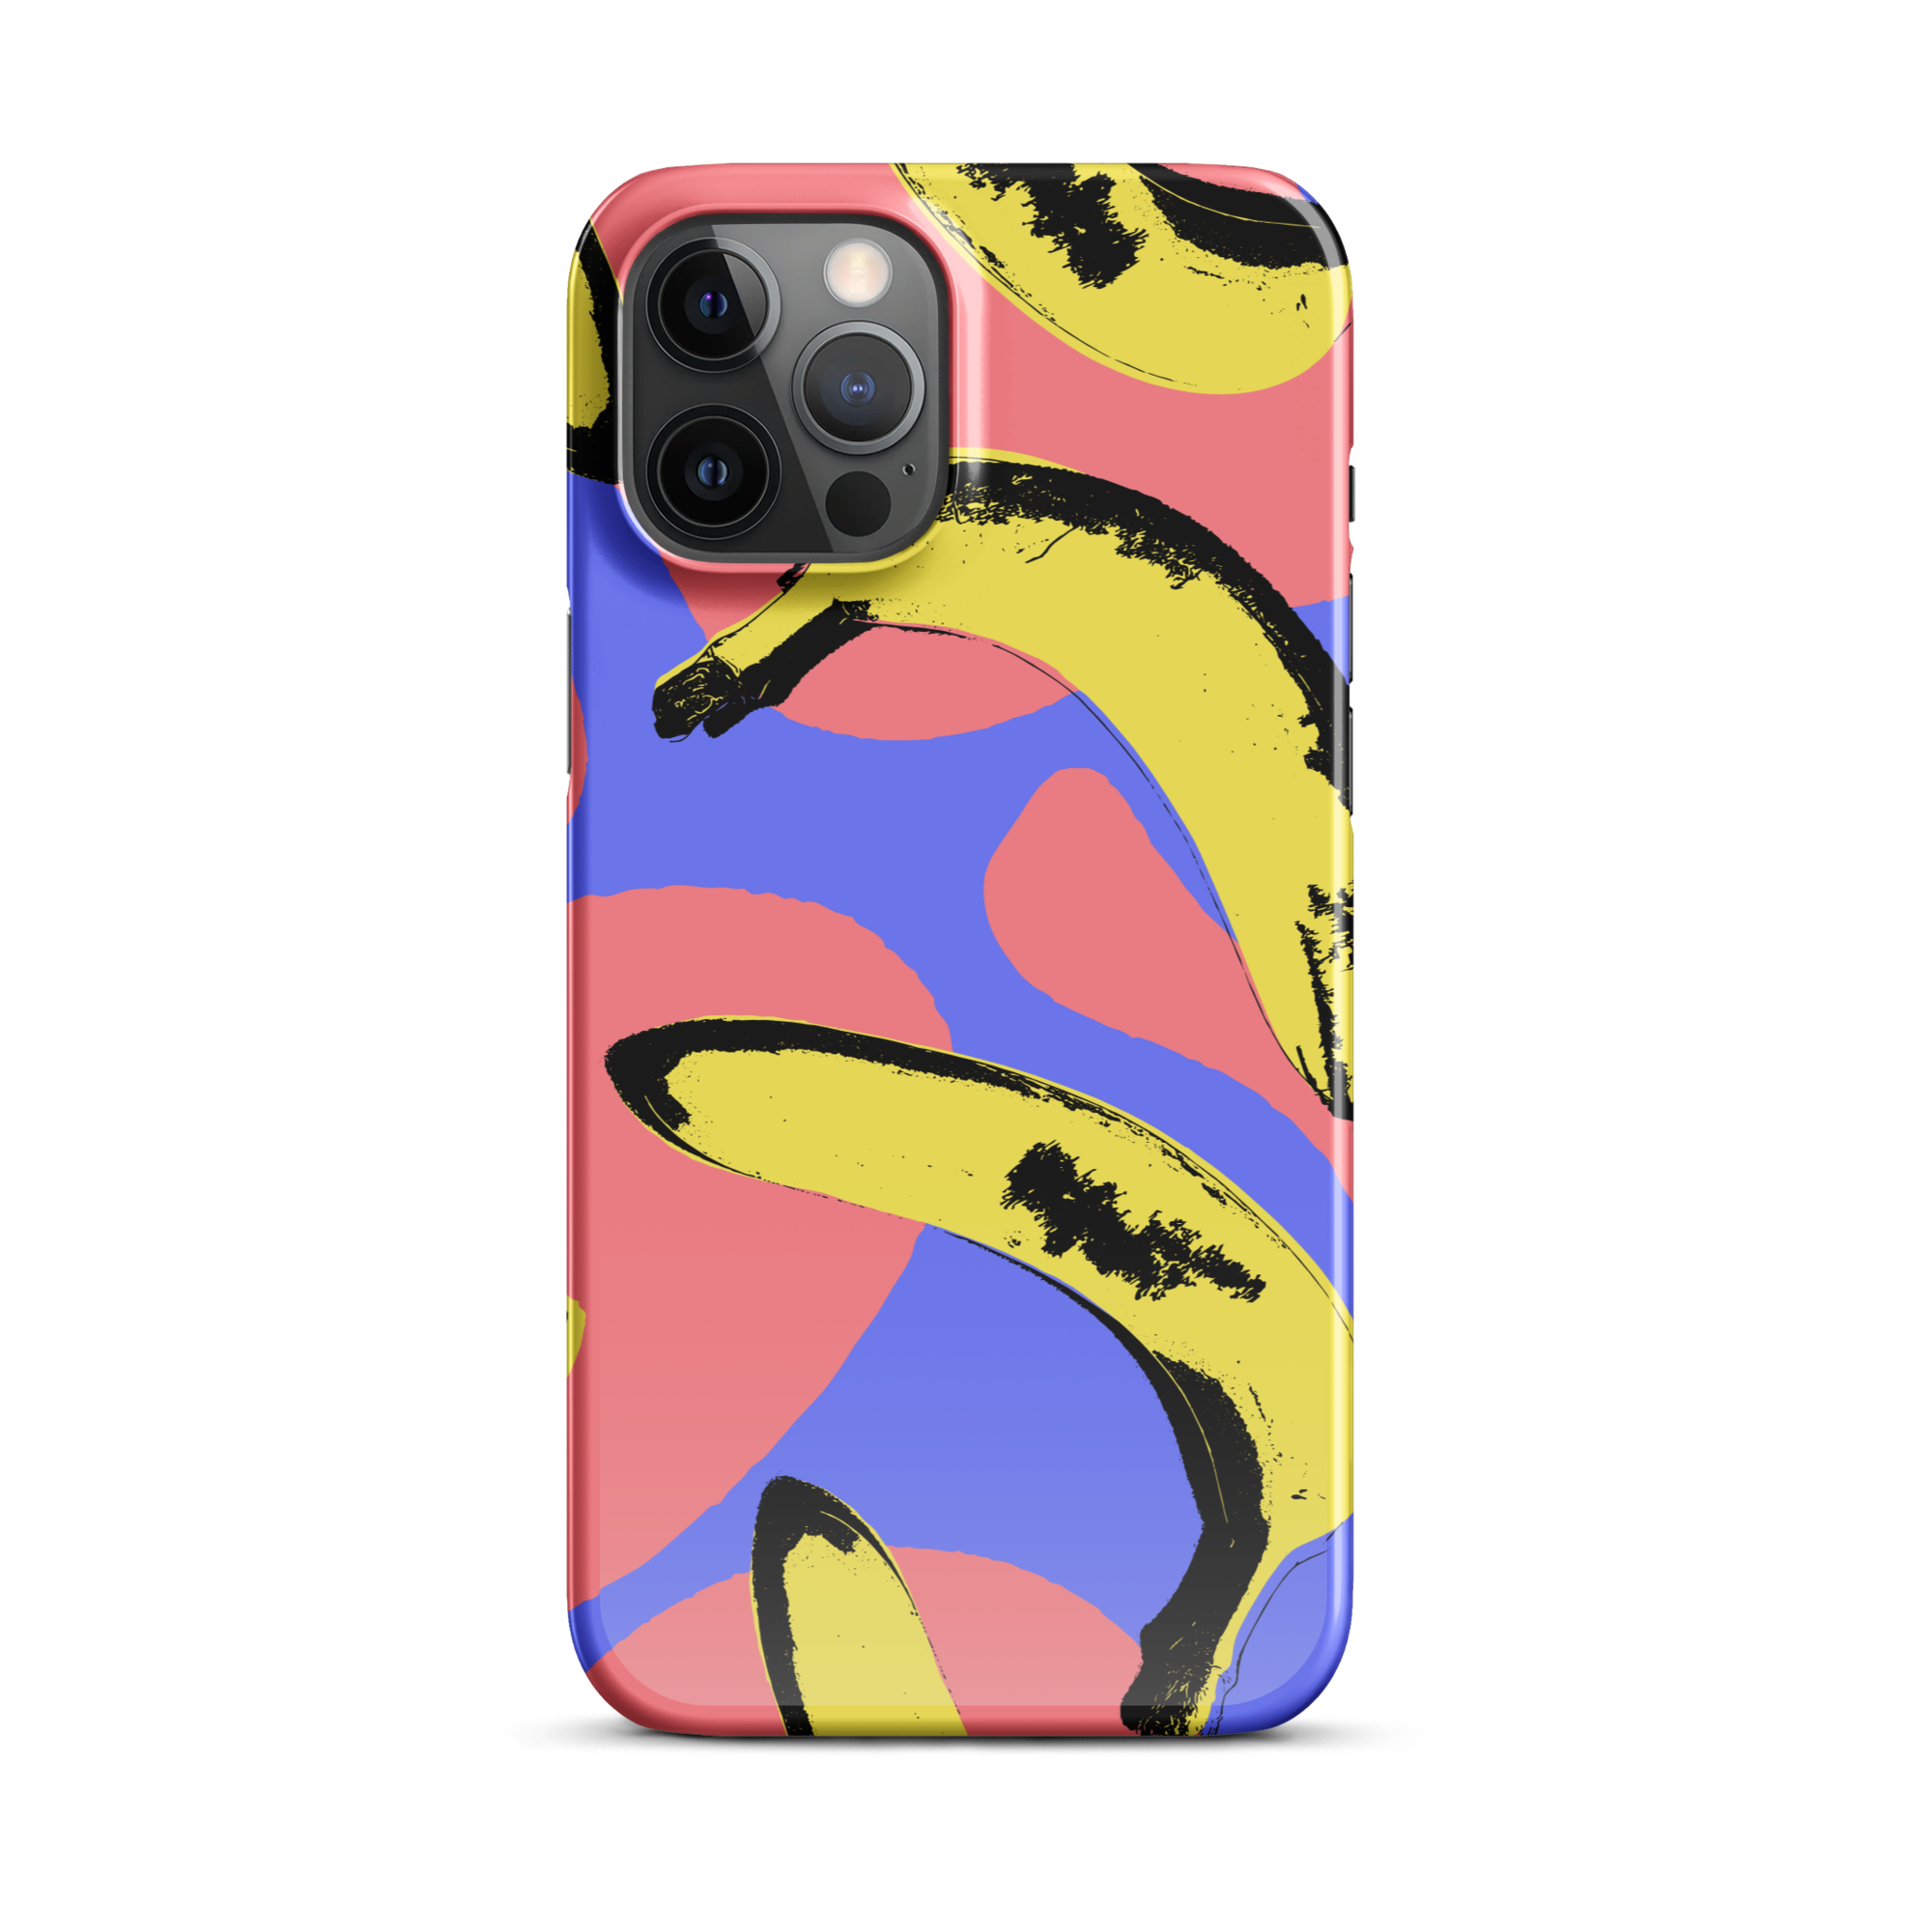 Banana iPhone 12 Pro Max Case